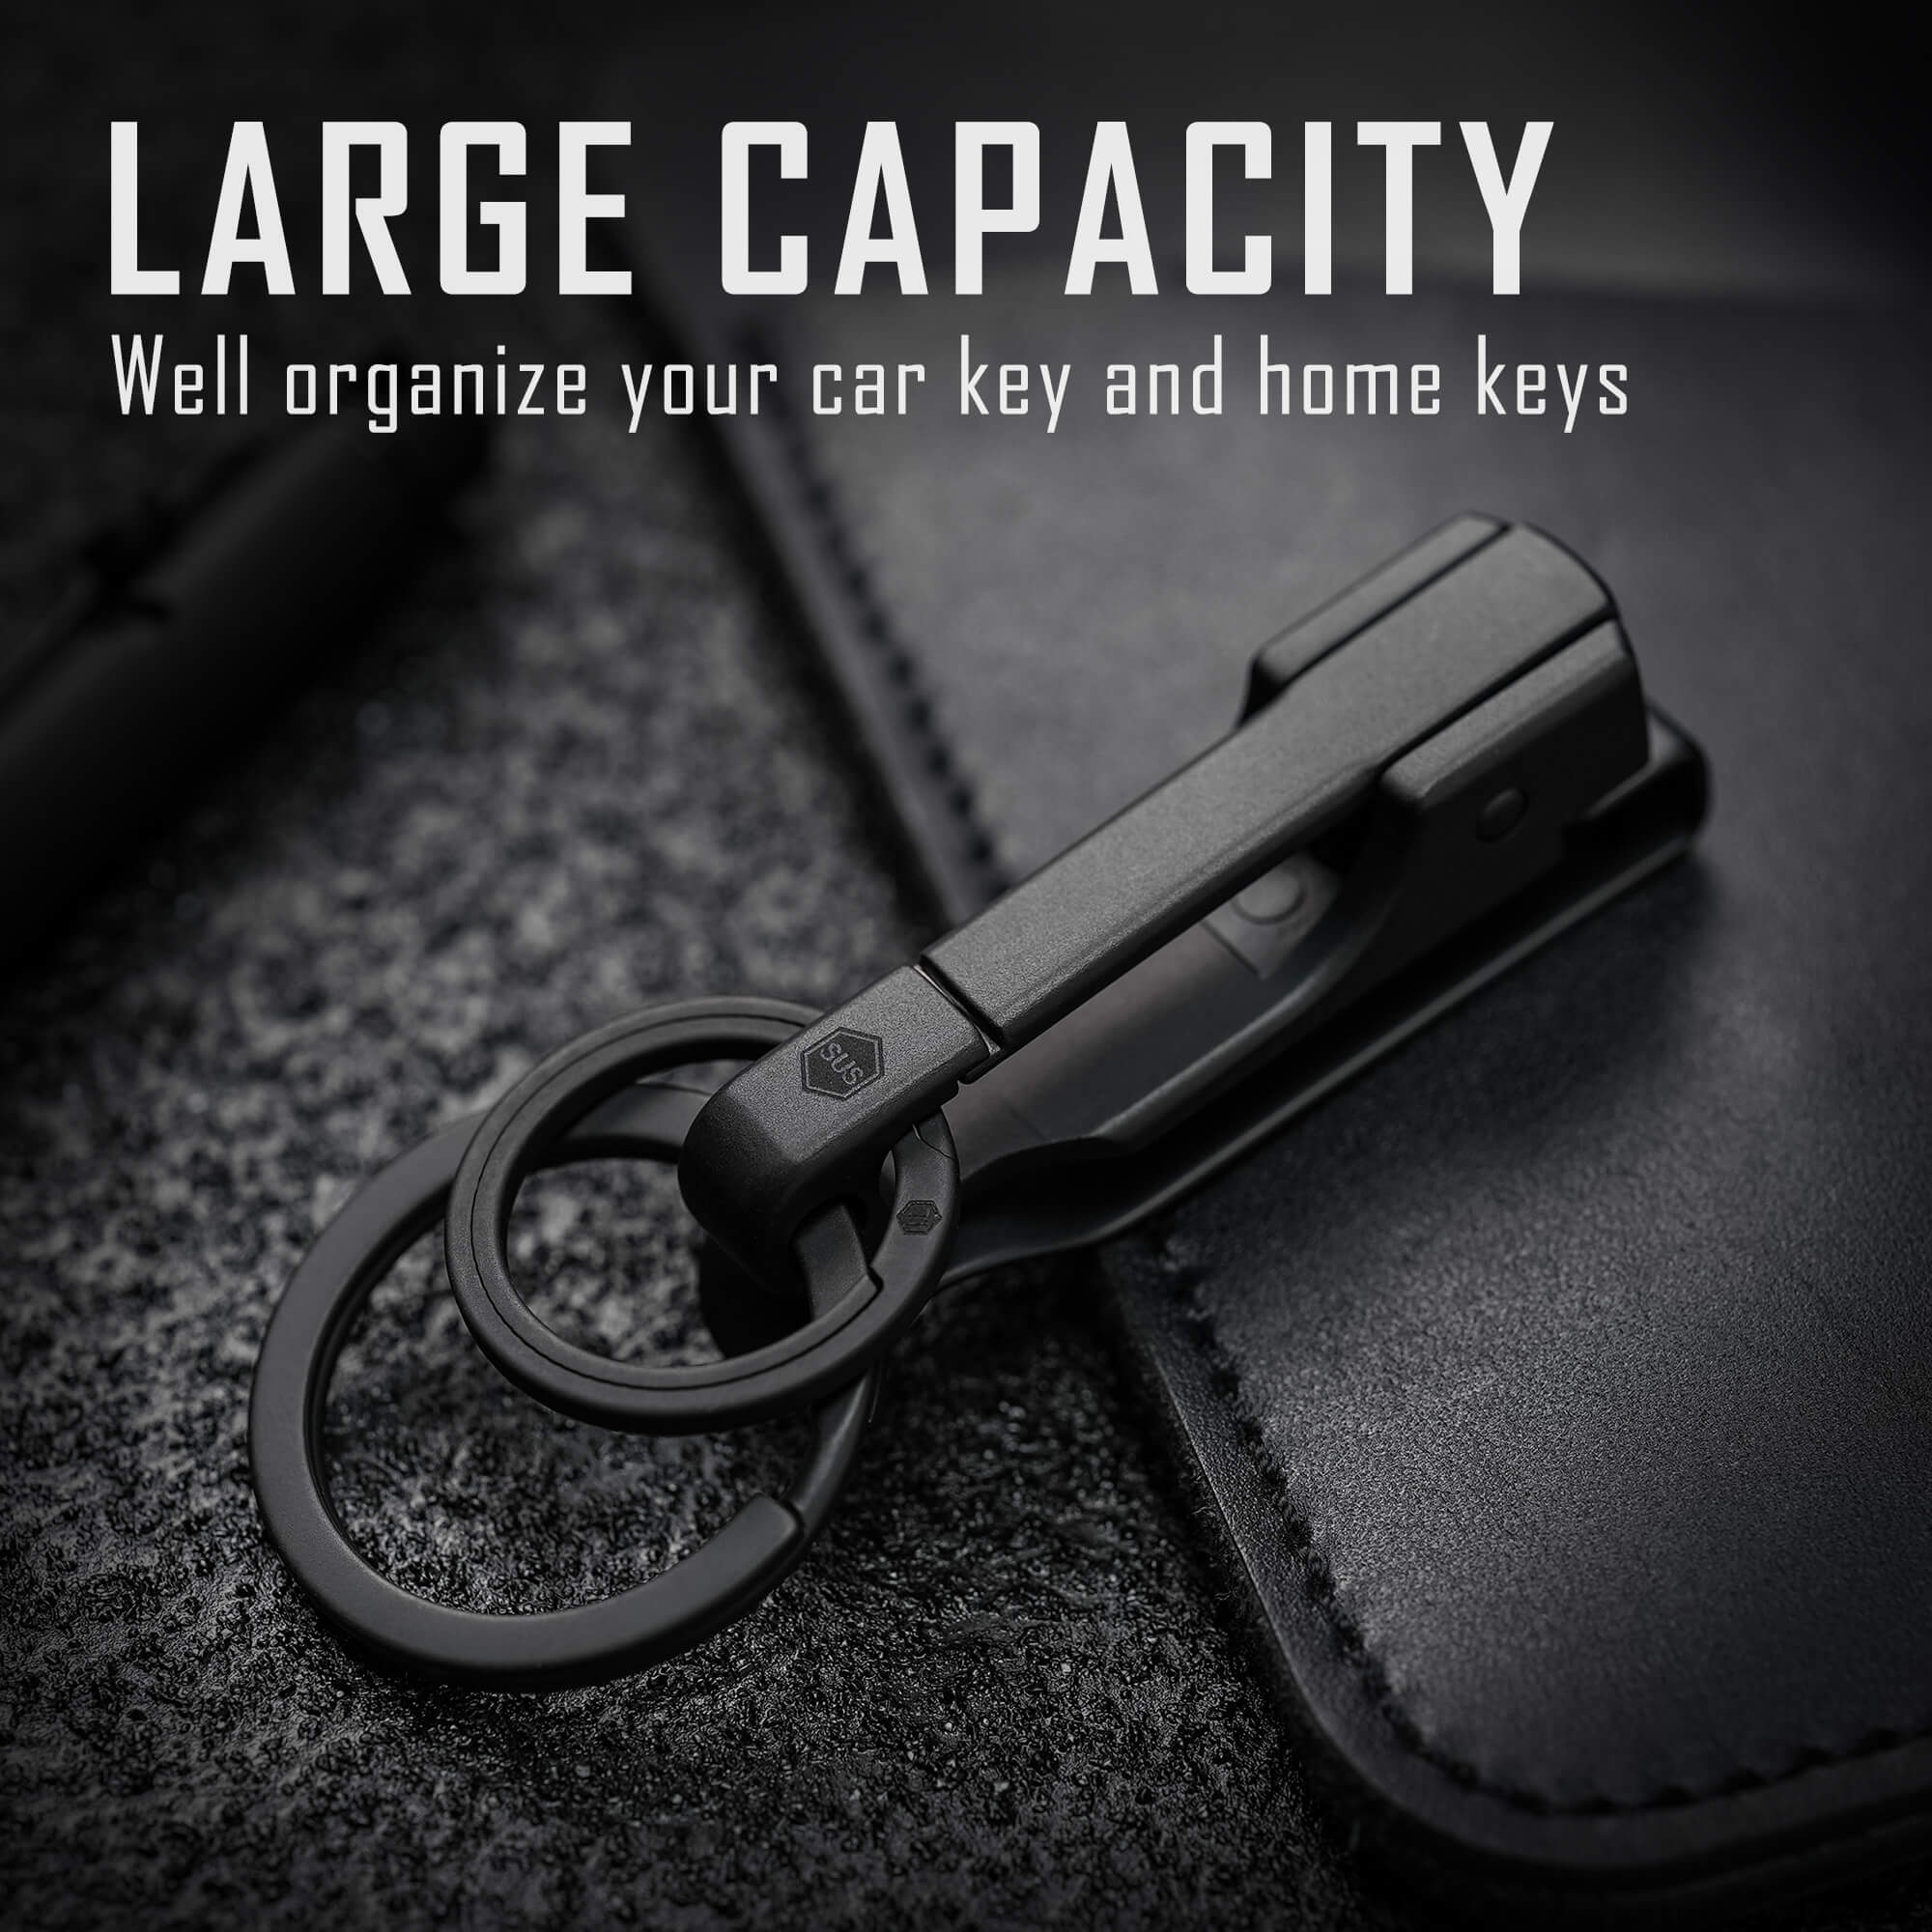 Unleash the Power of Sleek Design with KeyUnity's KS02 Stainless Steel Keychain in Black